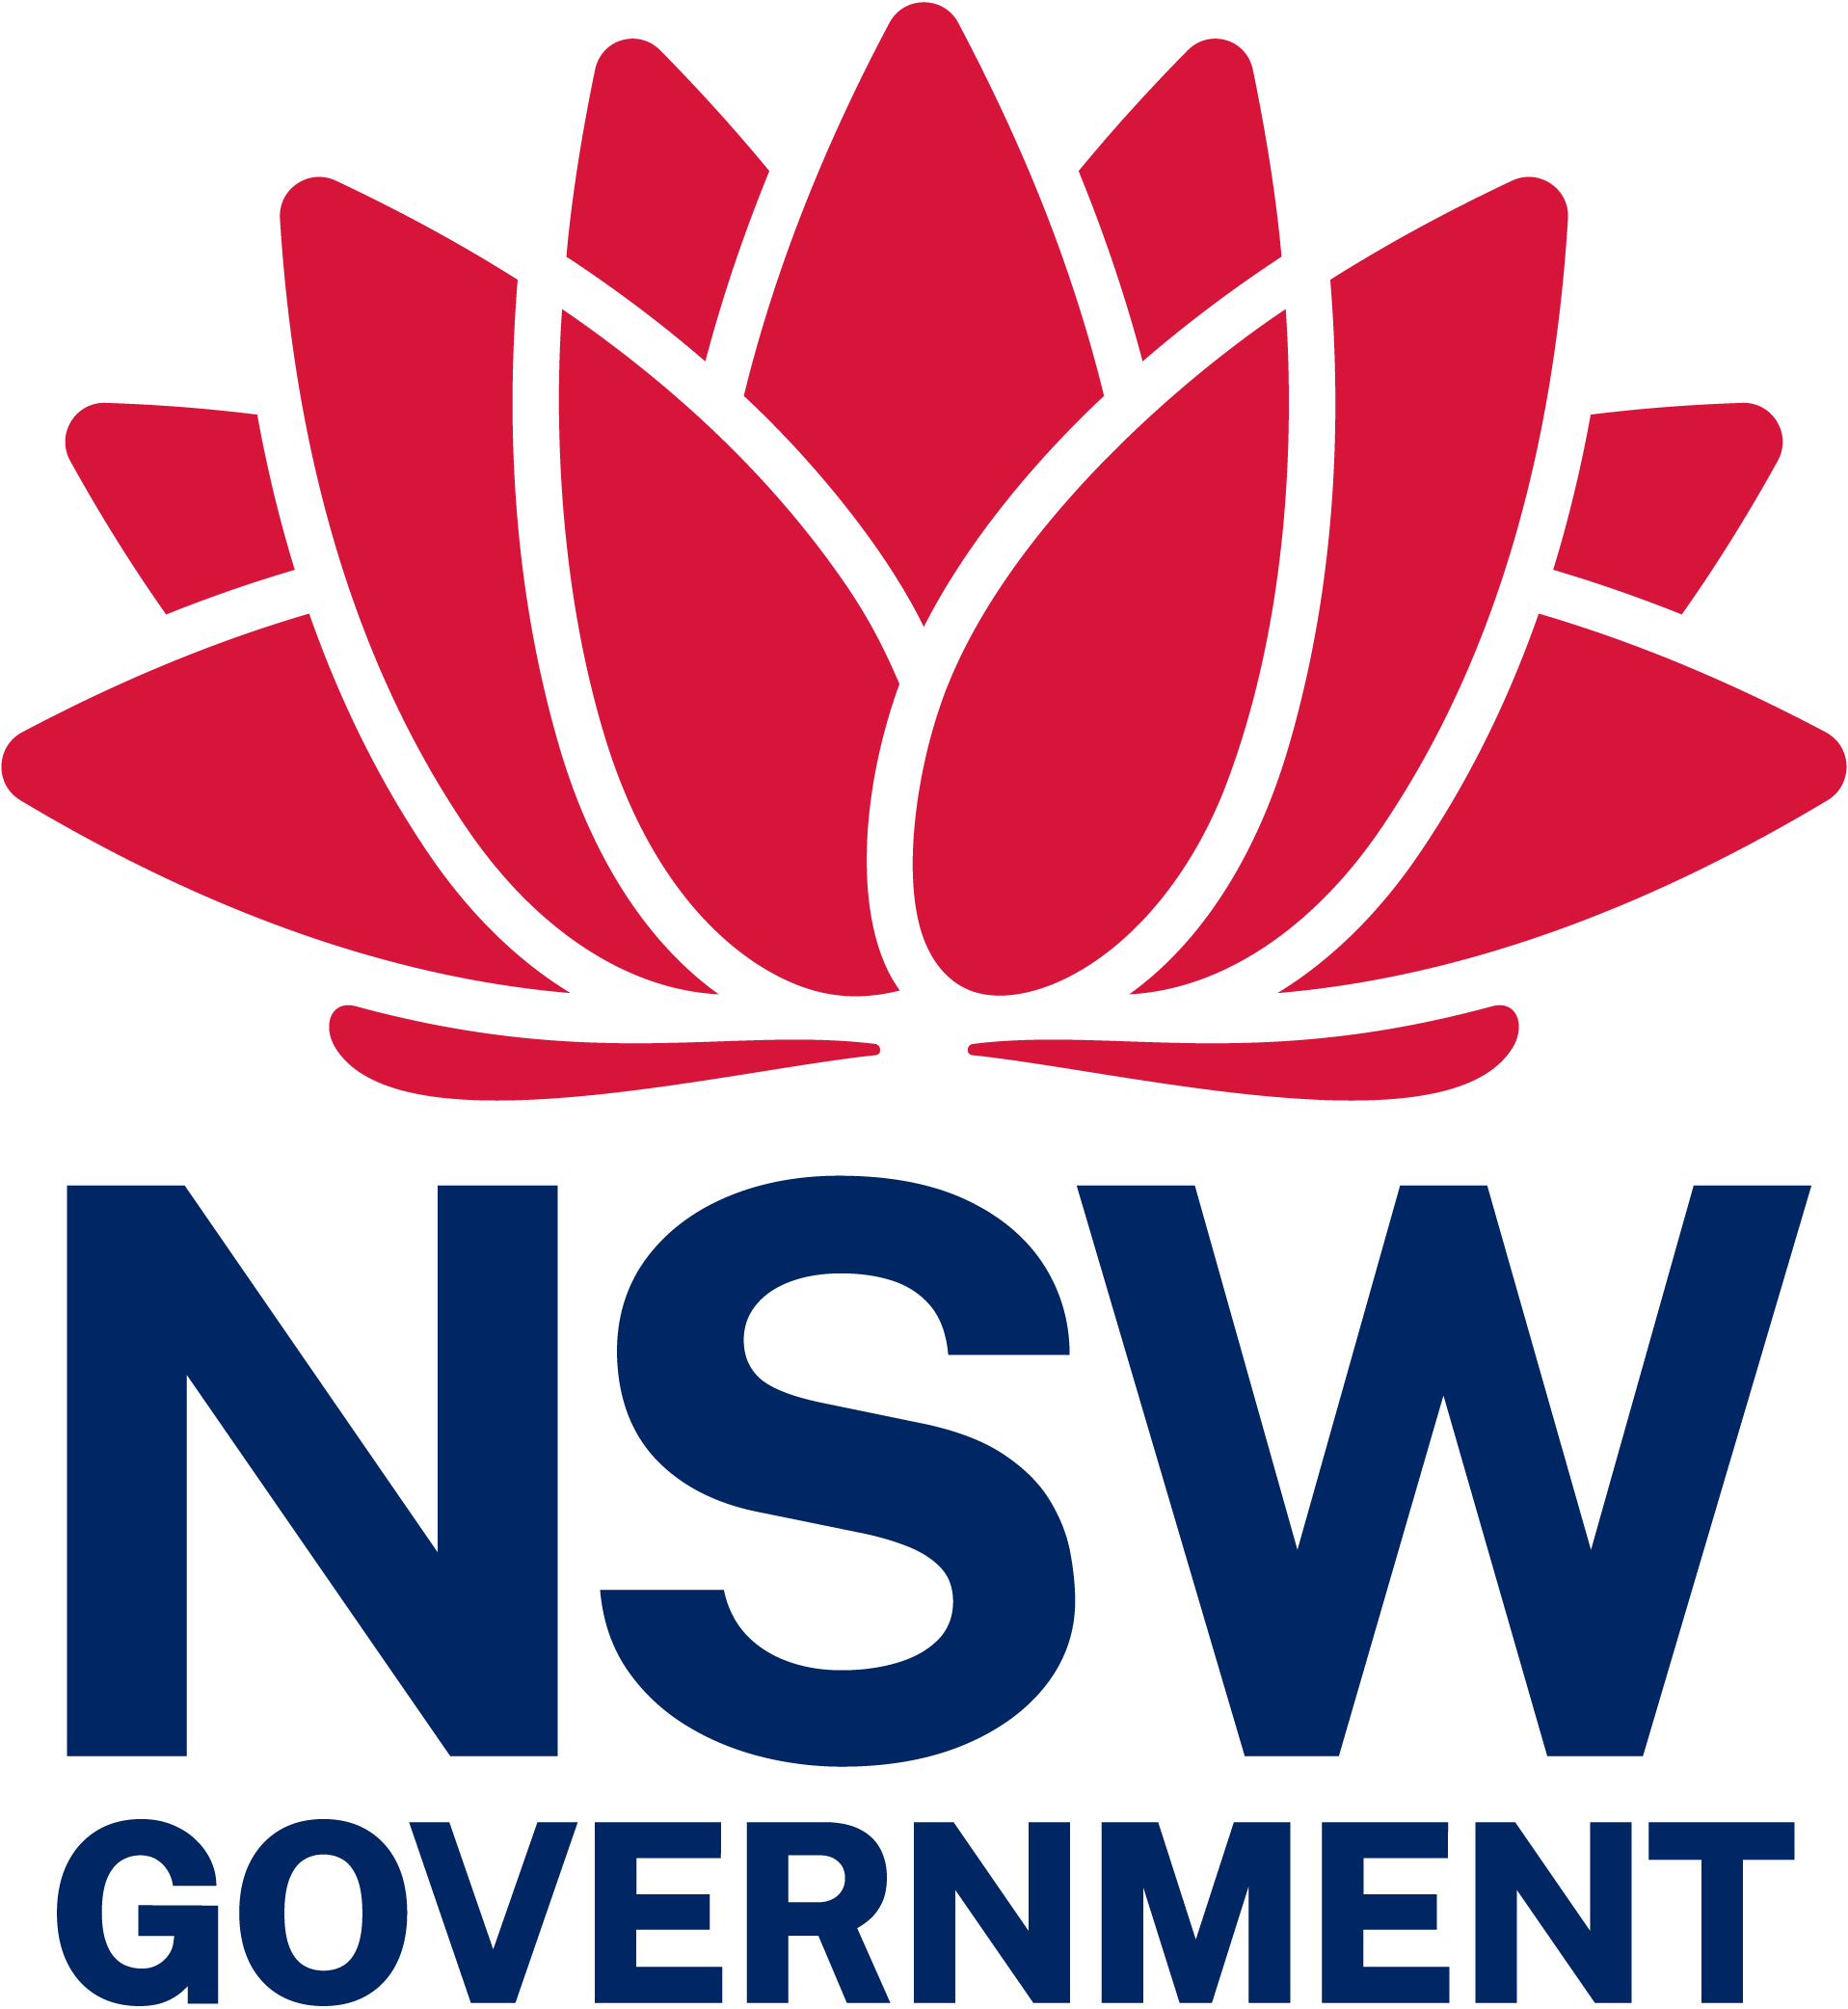 NSW Government logo